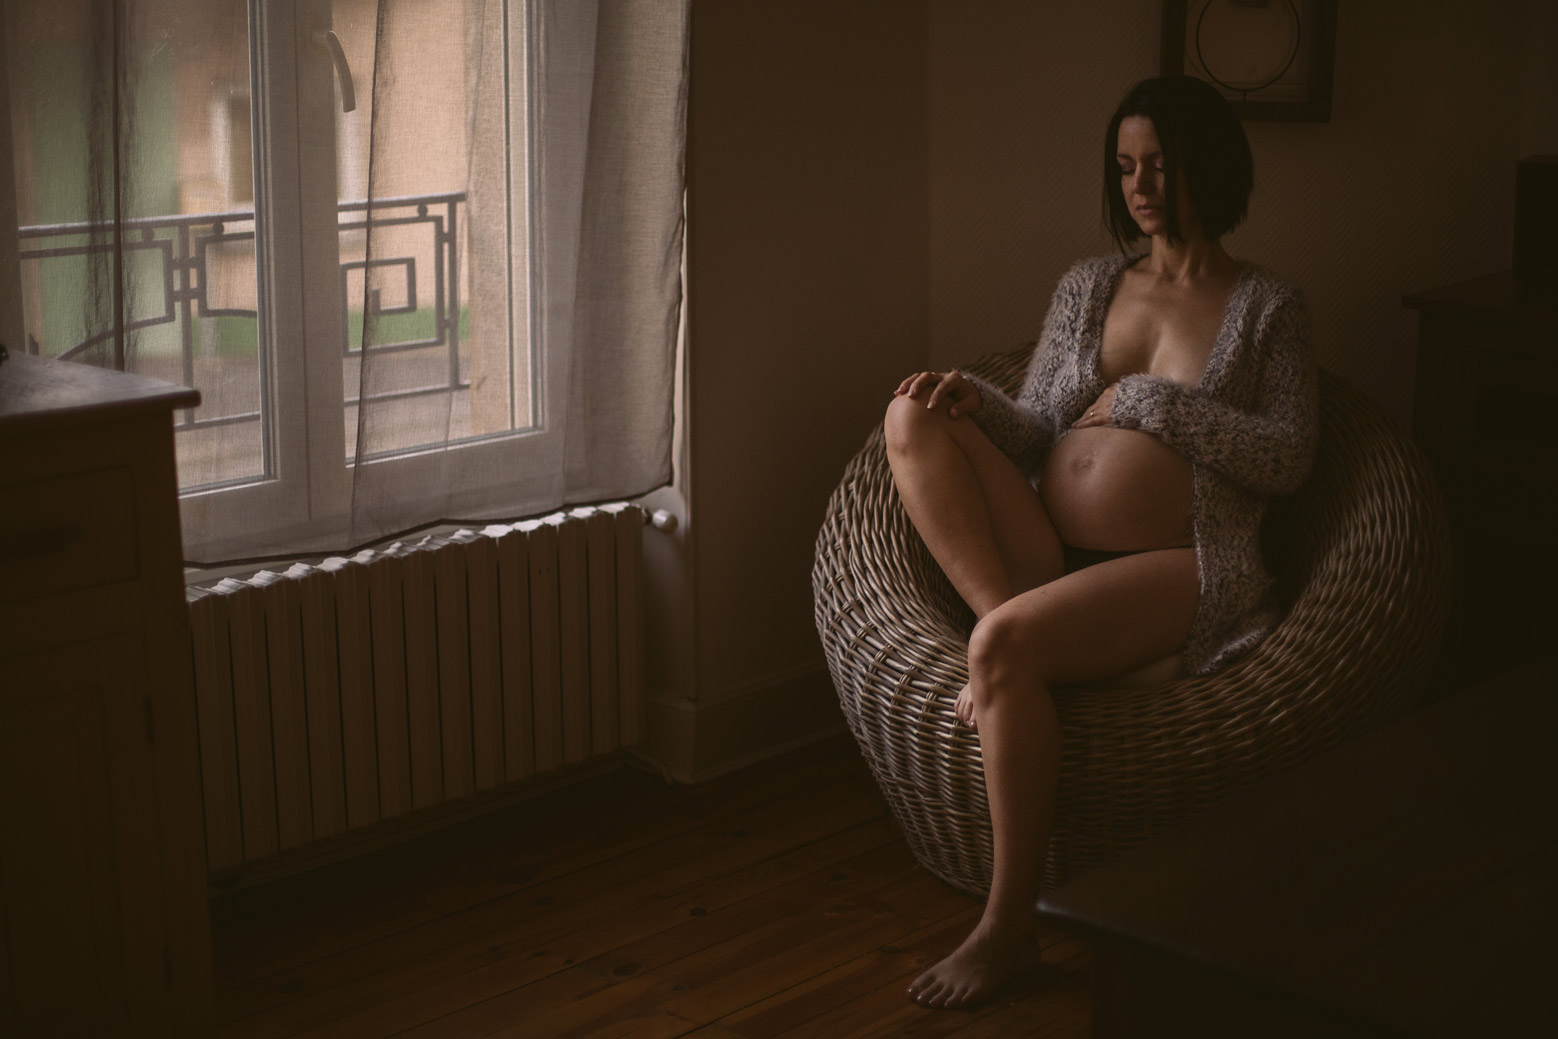 Photo shoot respondent pregnancy - Clermont ferrand